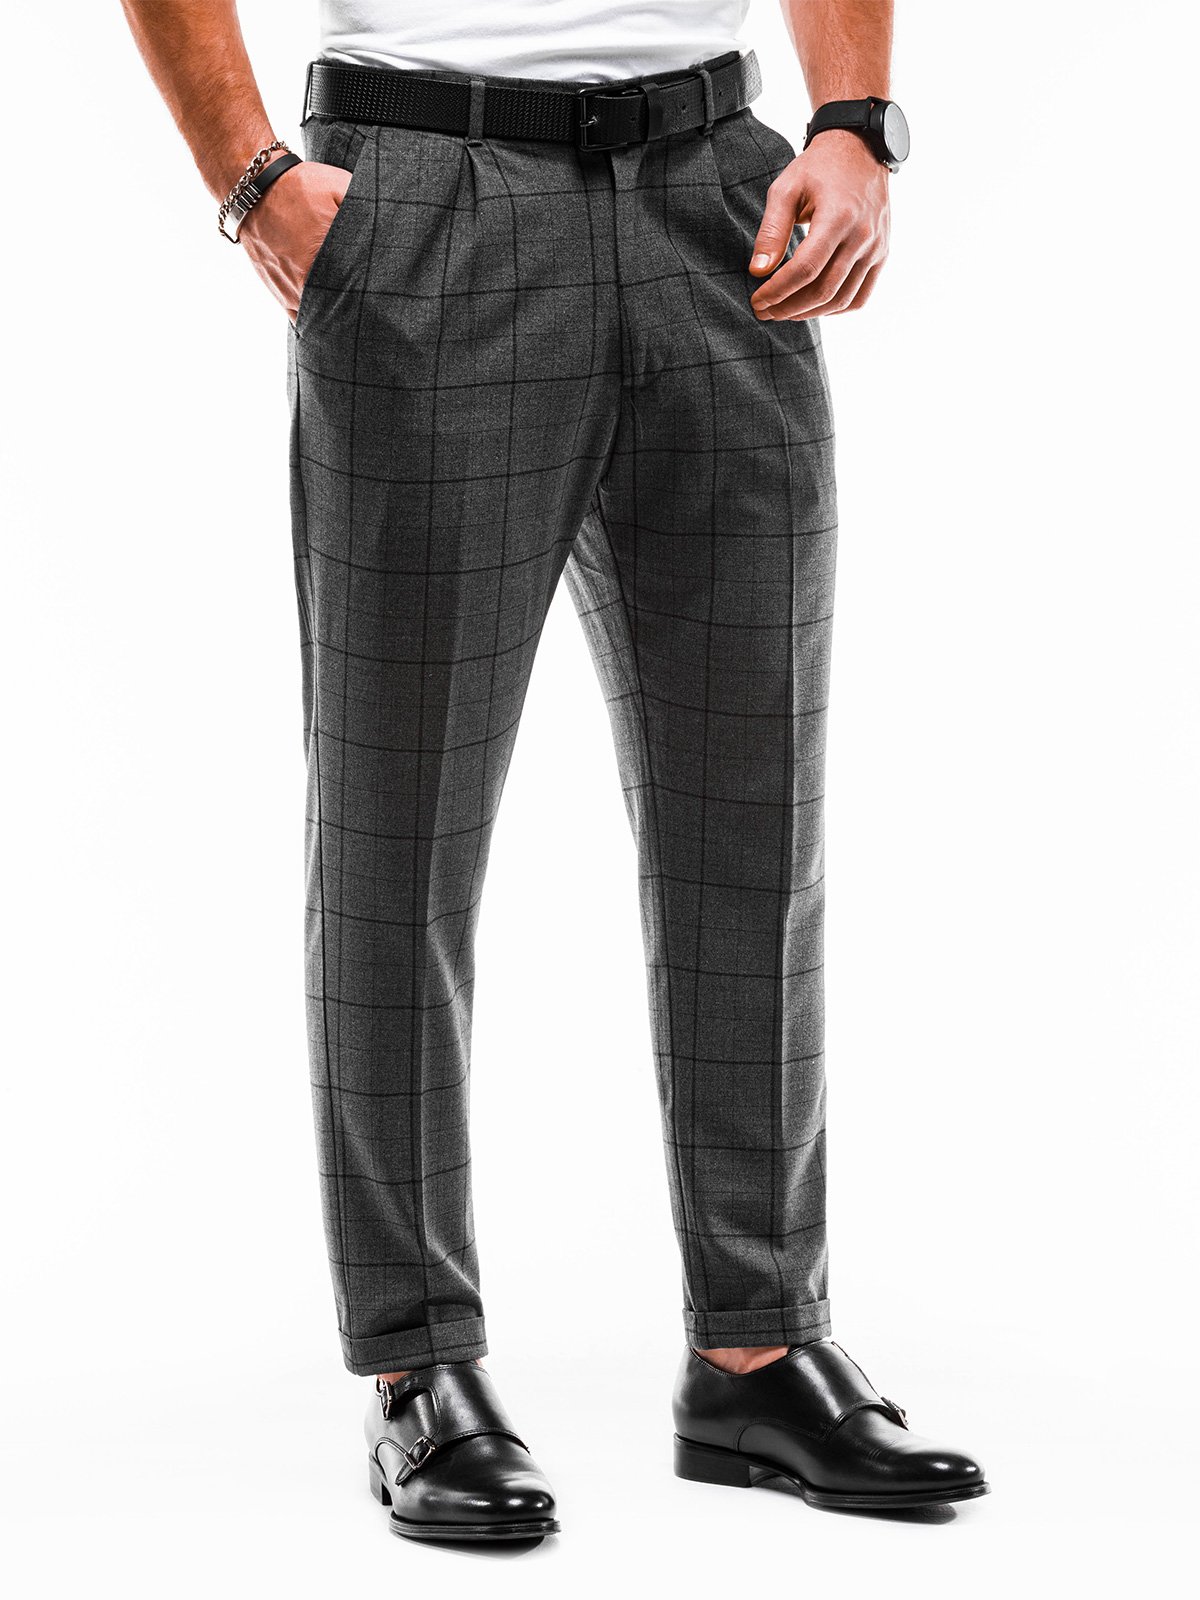 Men's chino pants P884 - dark grey | MODONE wholesale - Clothing For Men